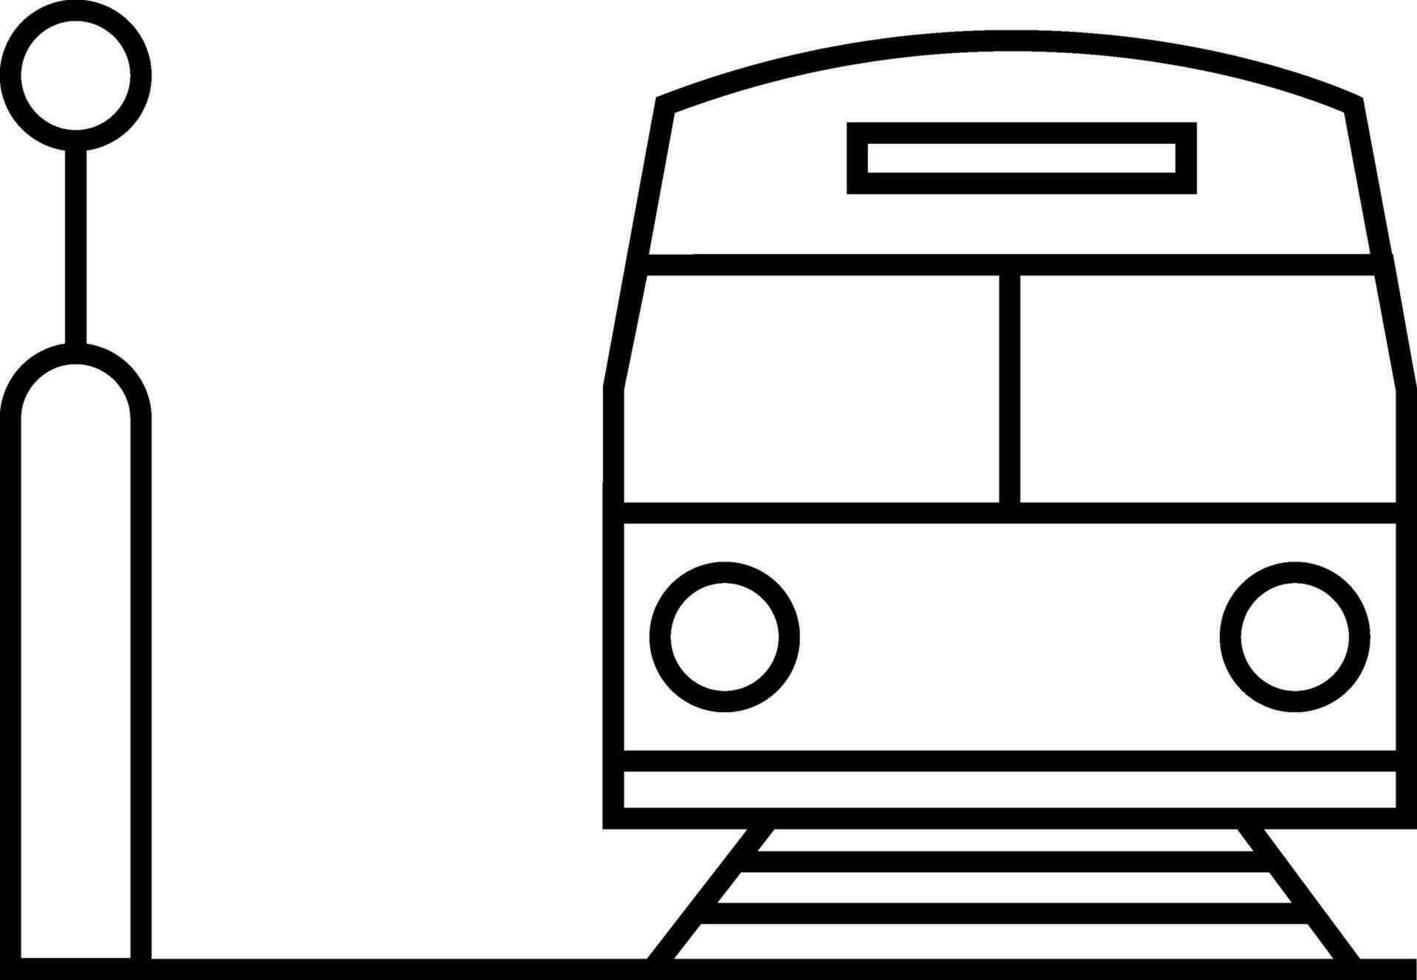 Line art illustration of train. vector